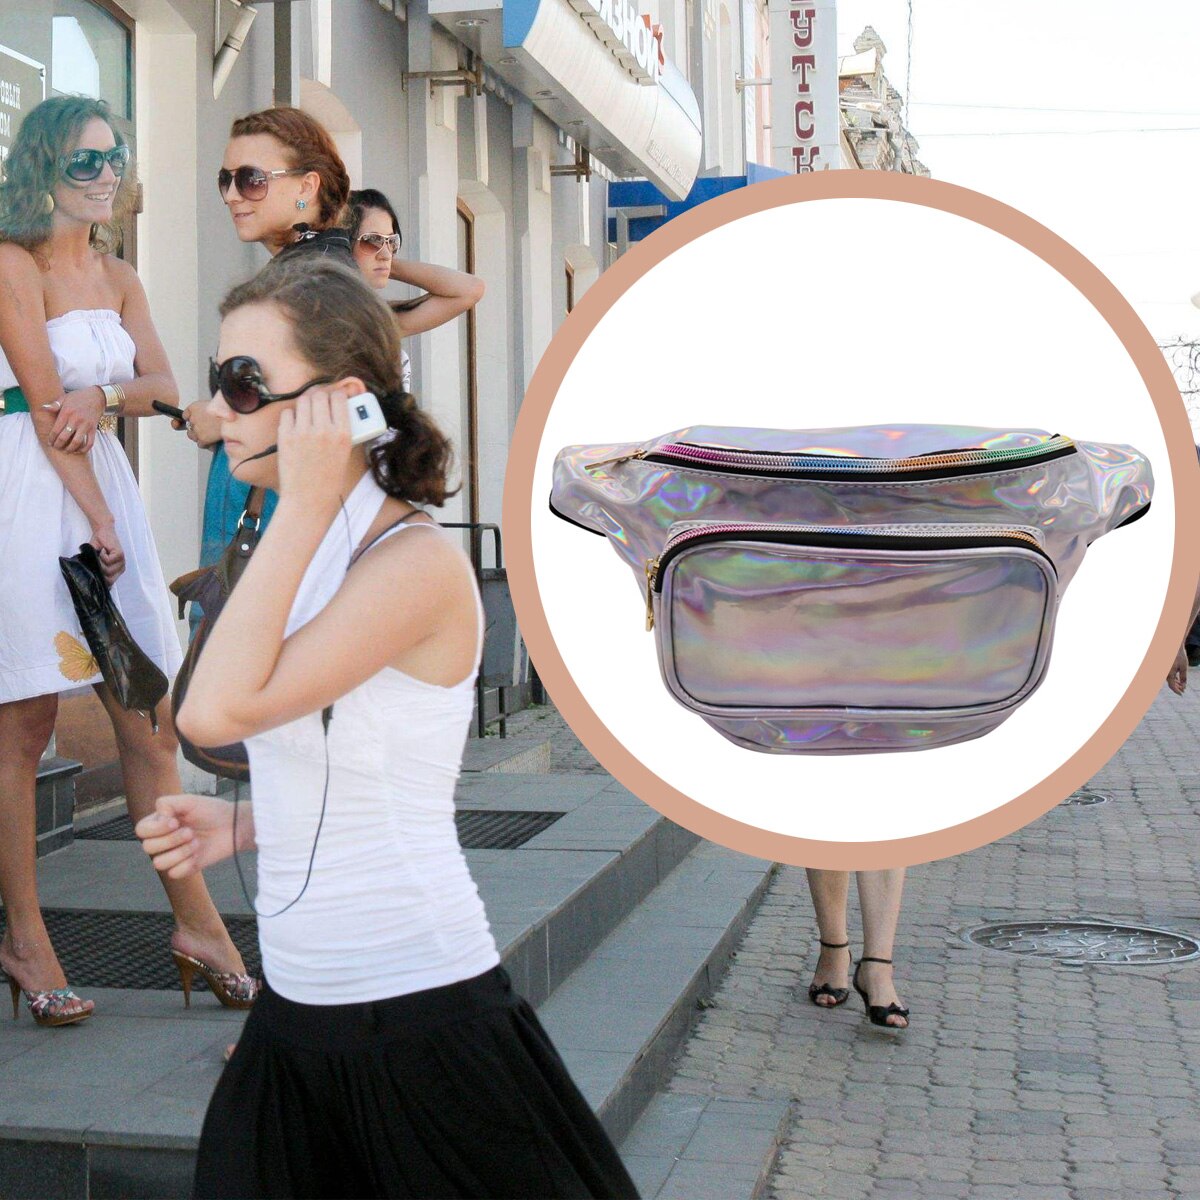 Women Hologram Laser Waist Bag Fashion Shiny Neon Fanny Pack Punk Reflective Bum Bag Travel Purse - ebowsos